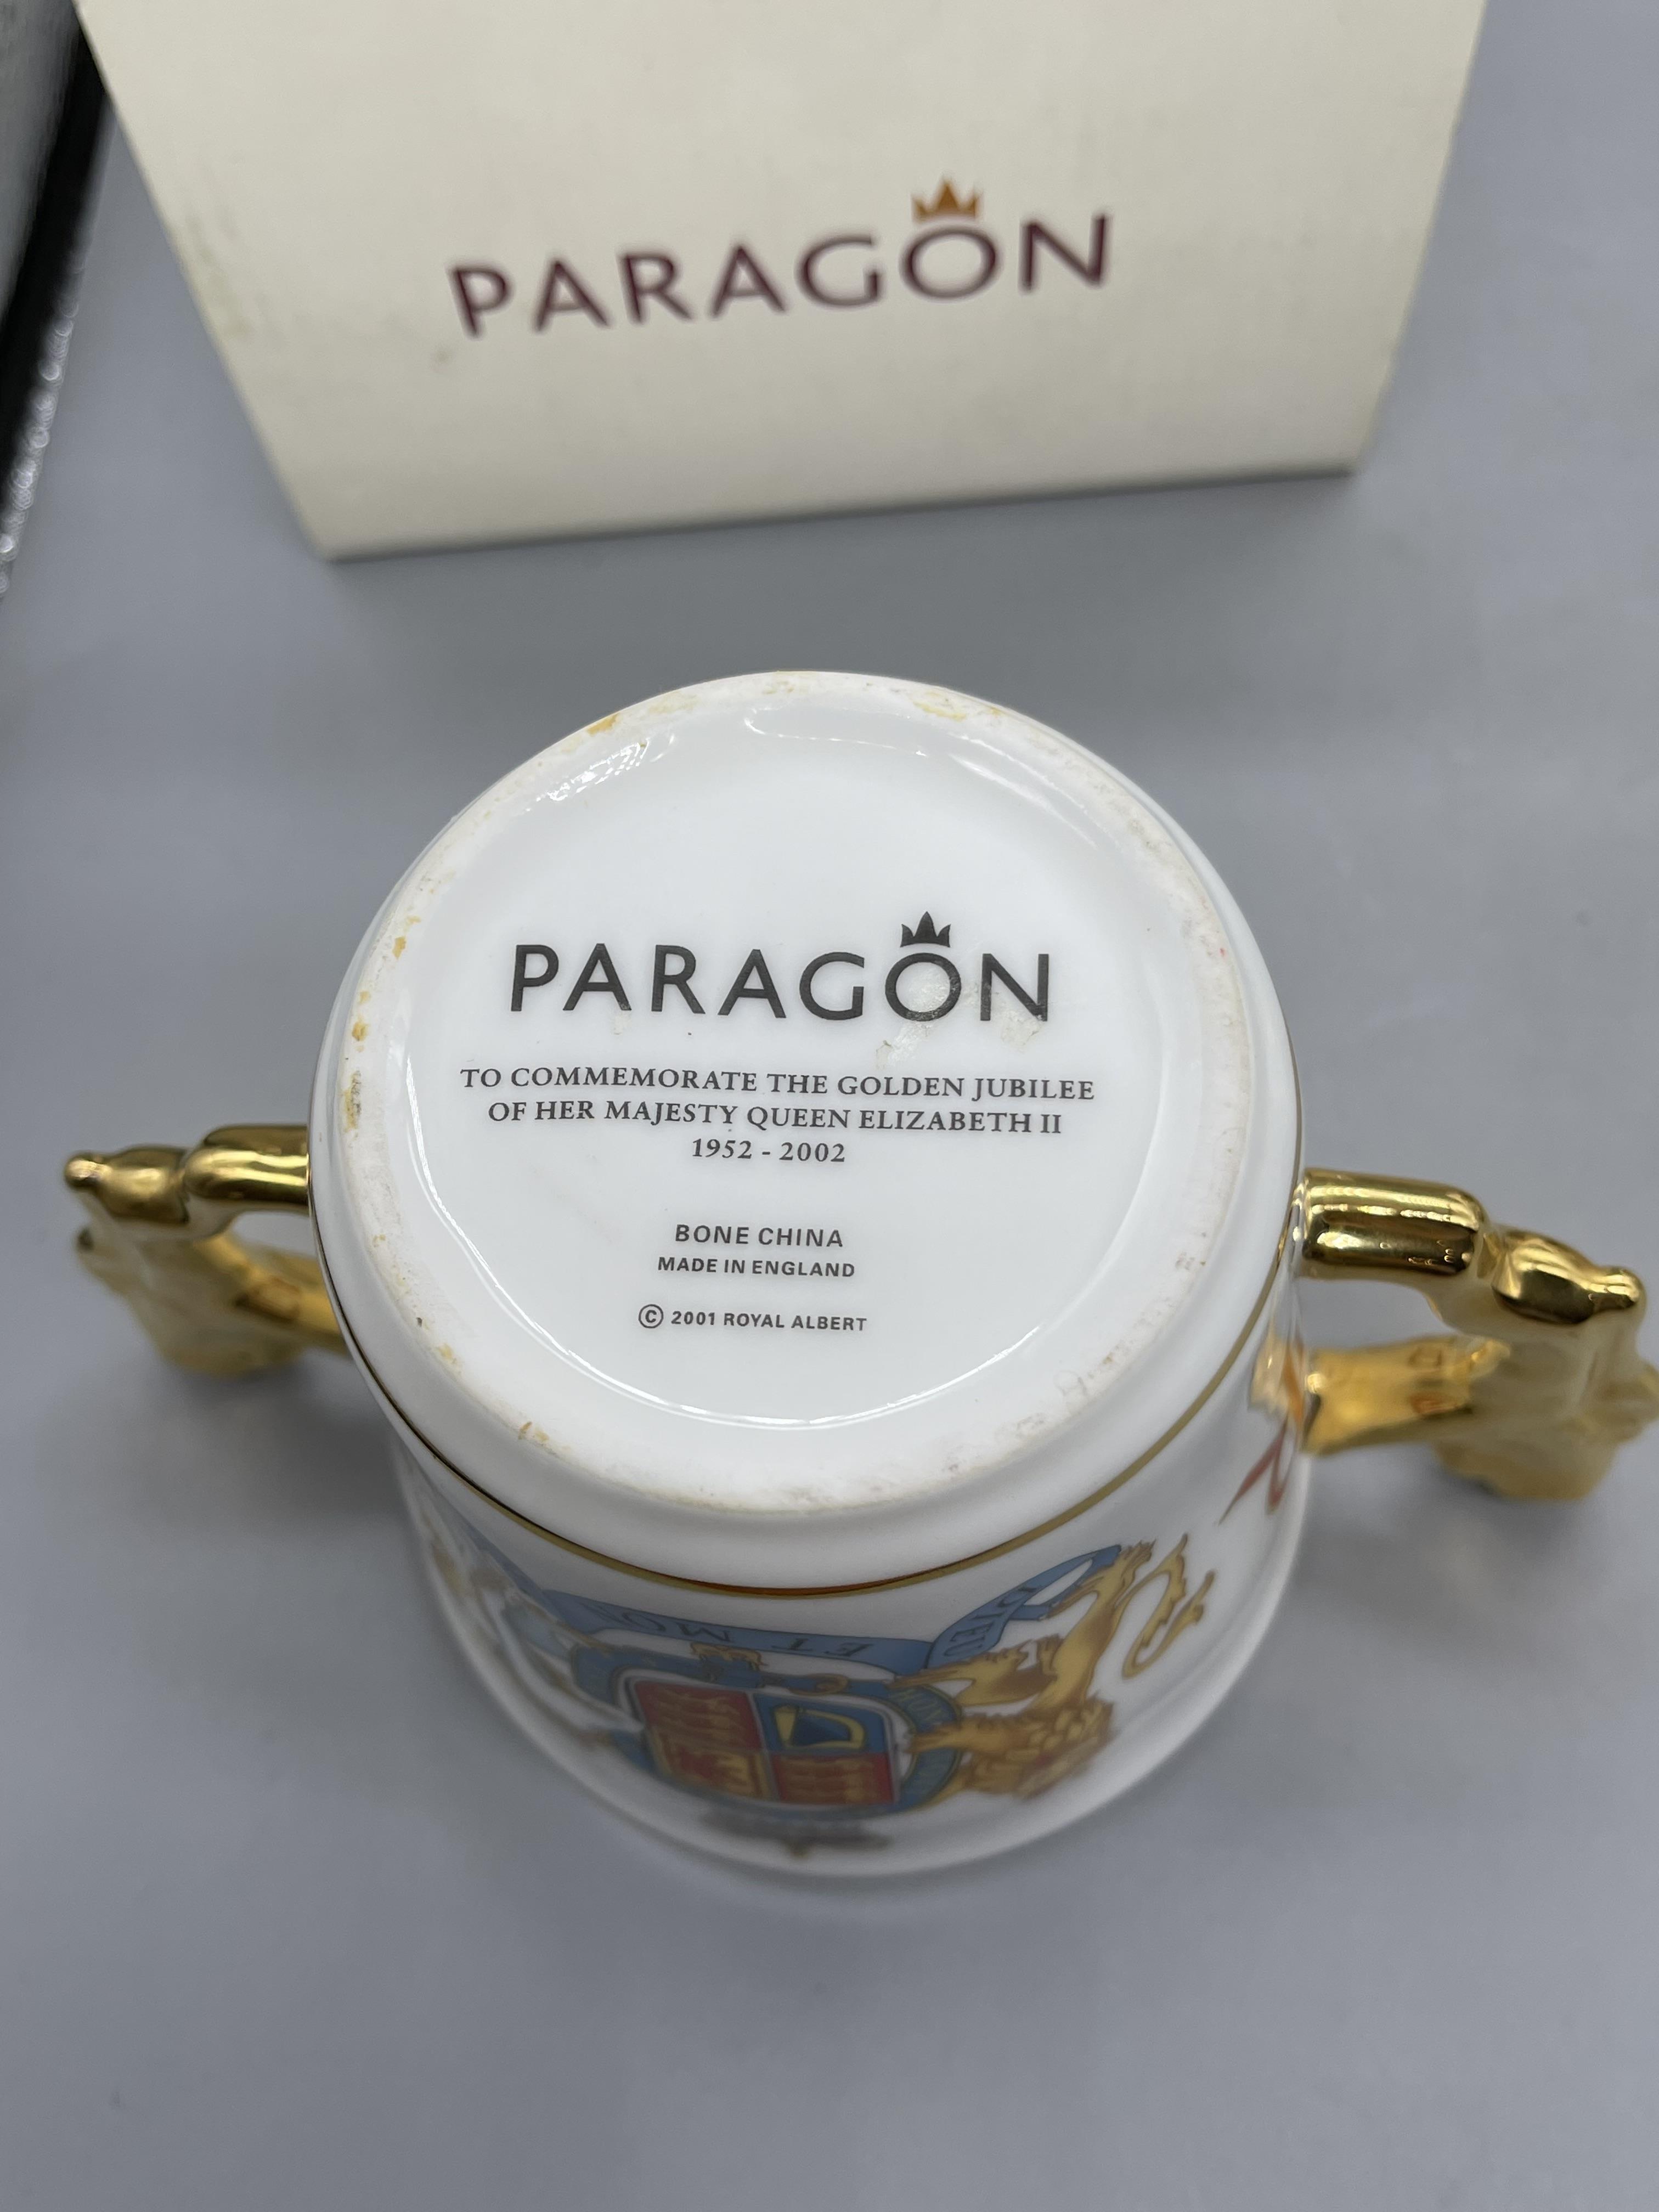 Boxed Royal Albert and Royal Doulton Paragon Comme - Image 5 of 9